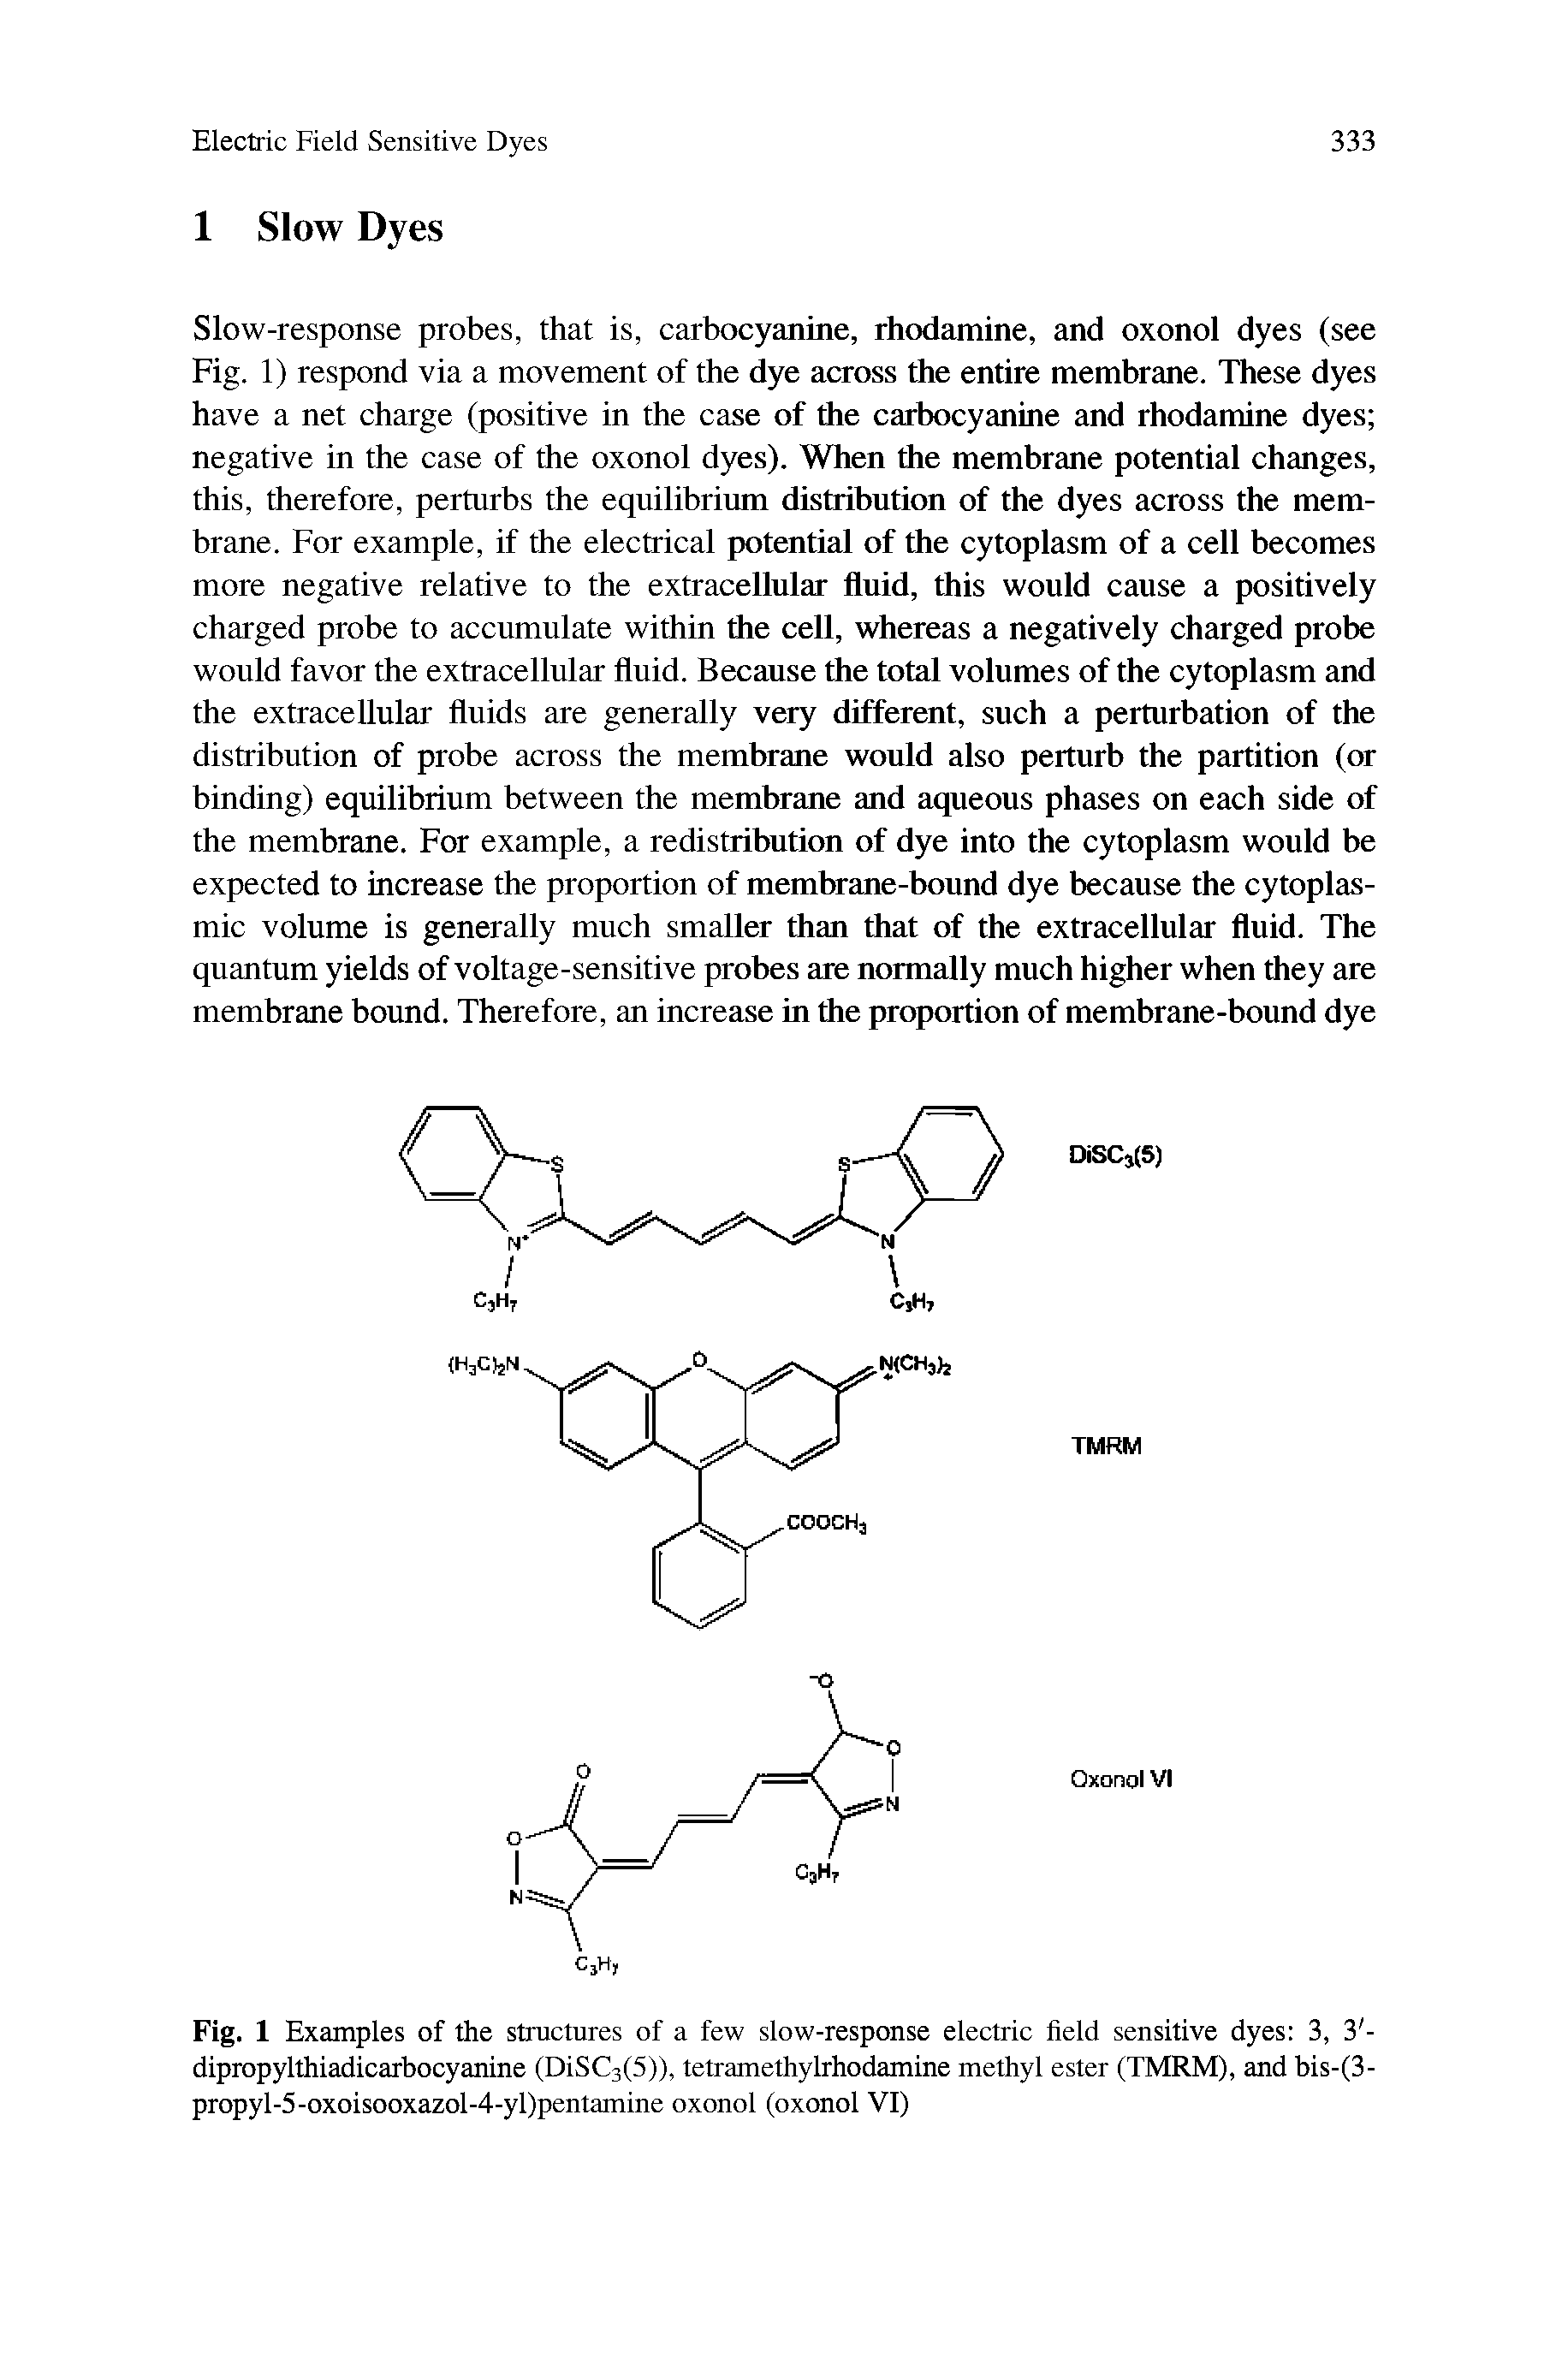 Fig. 1 Examples of the structures of a few slow-response electric field sensitive dyes 3, 3 -dipropylthiadicarbocyanine (DiSC3(5)), tetramethylrhodamine methyl ester (TMRM), and bis-(3-propyl-5-oxoisooxazol-4-yl)pentamine oxonol (oxonol VI)...